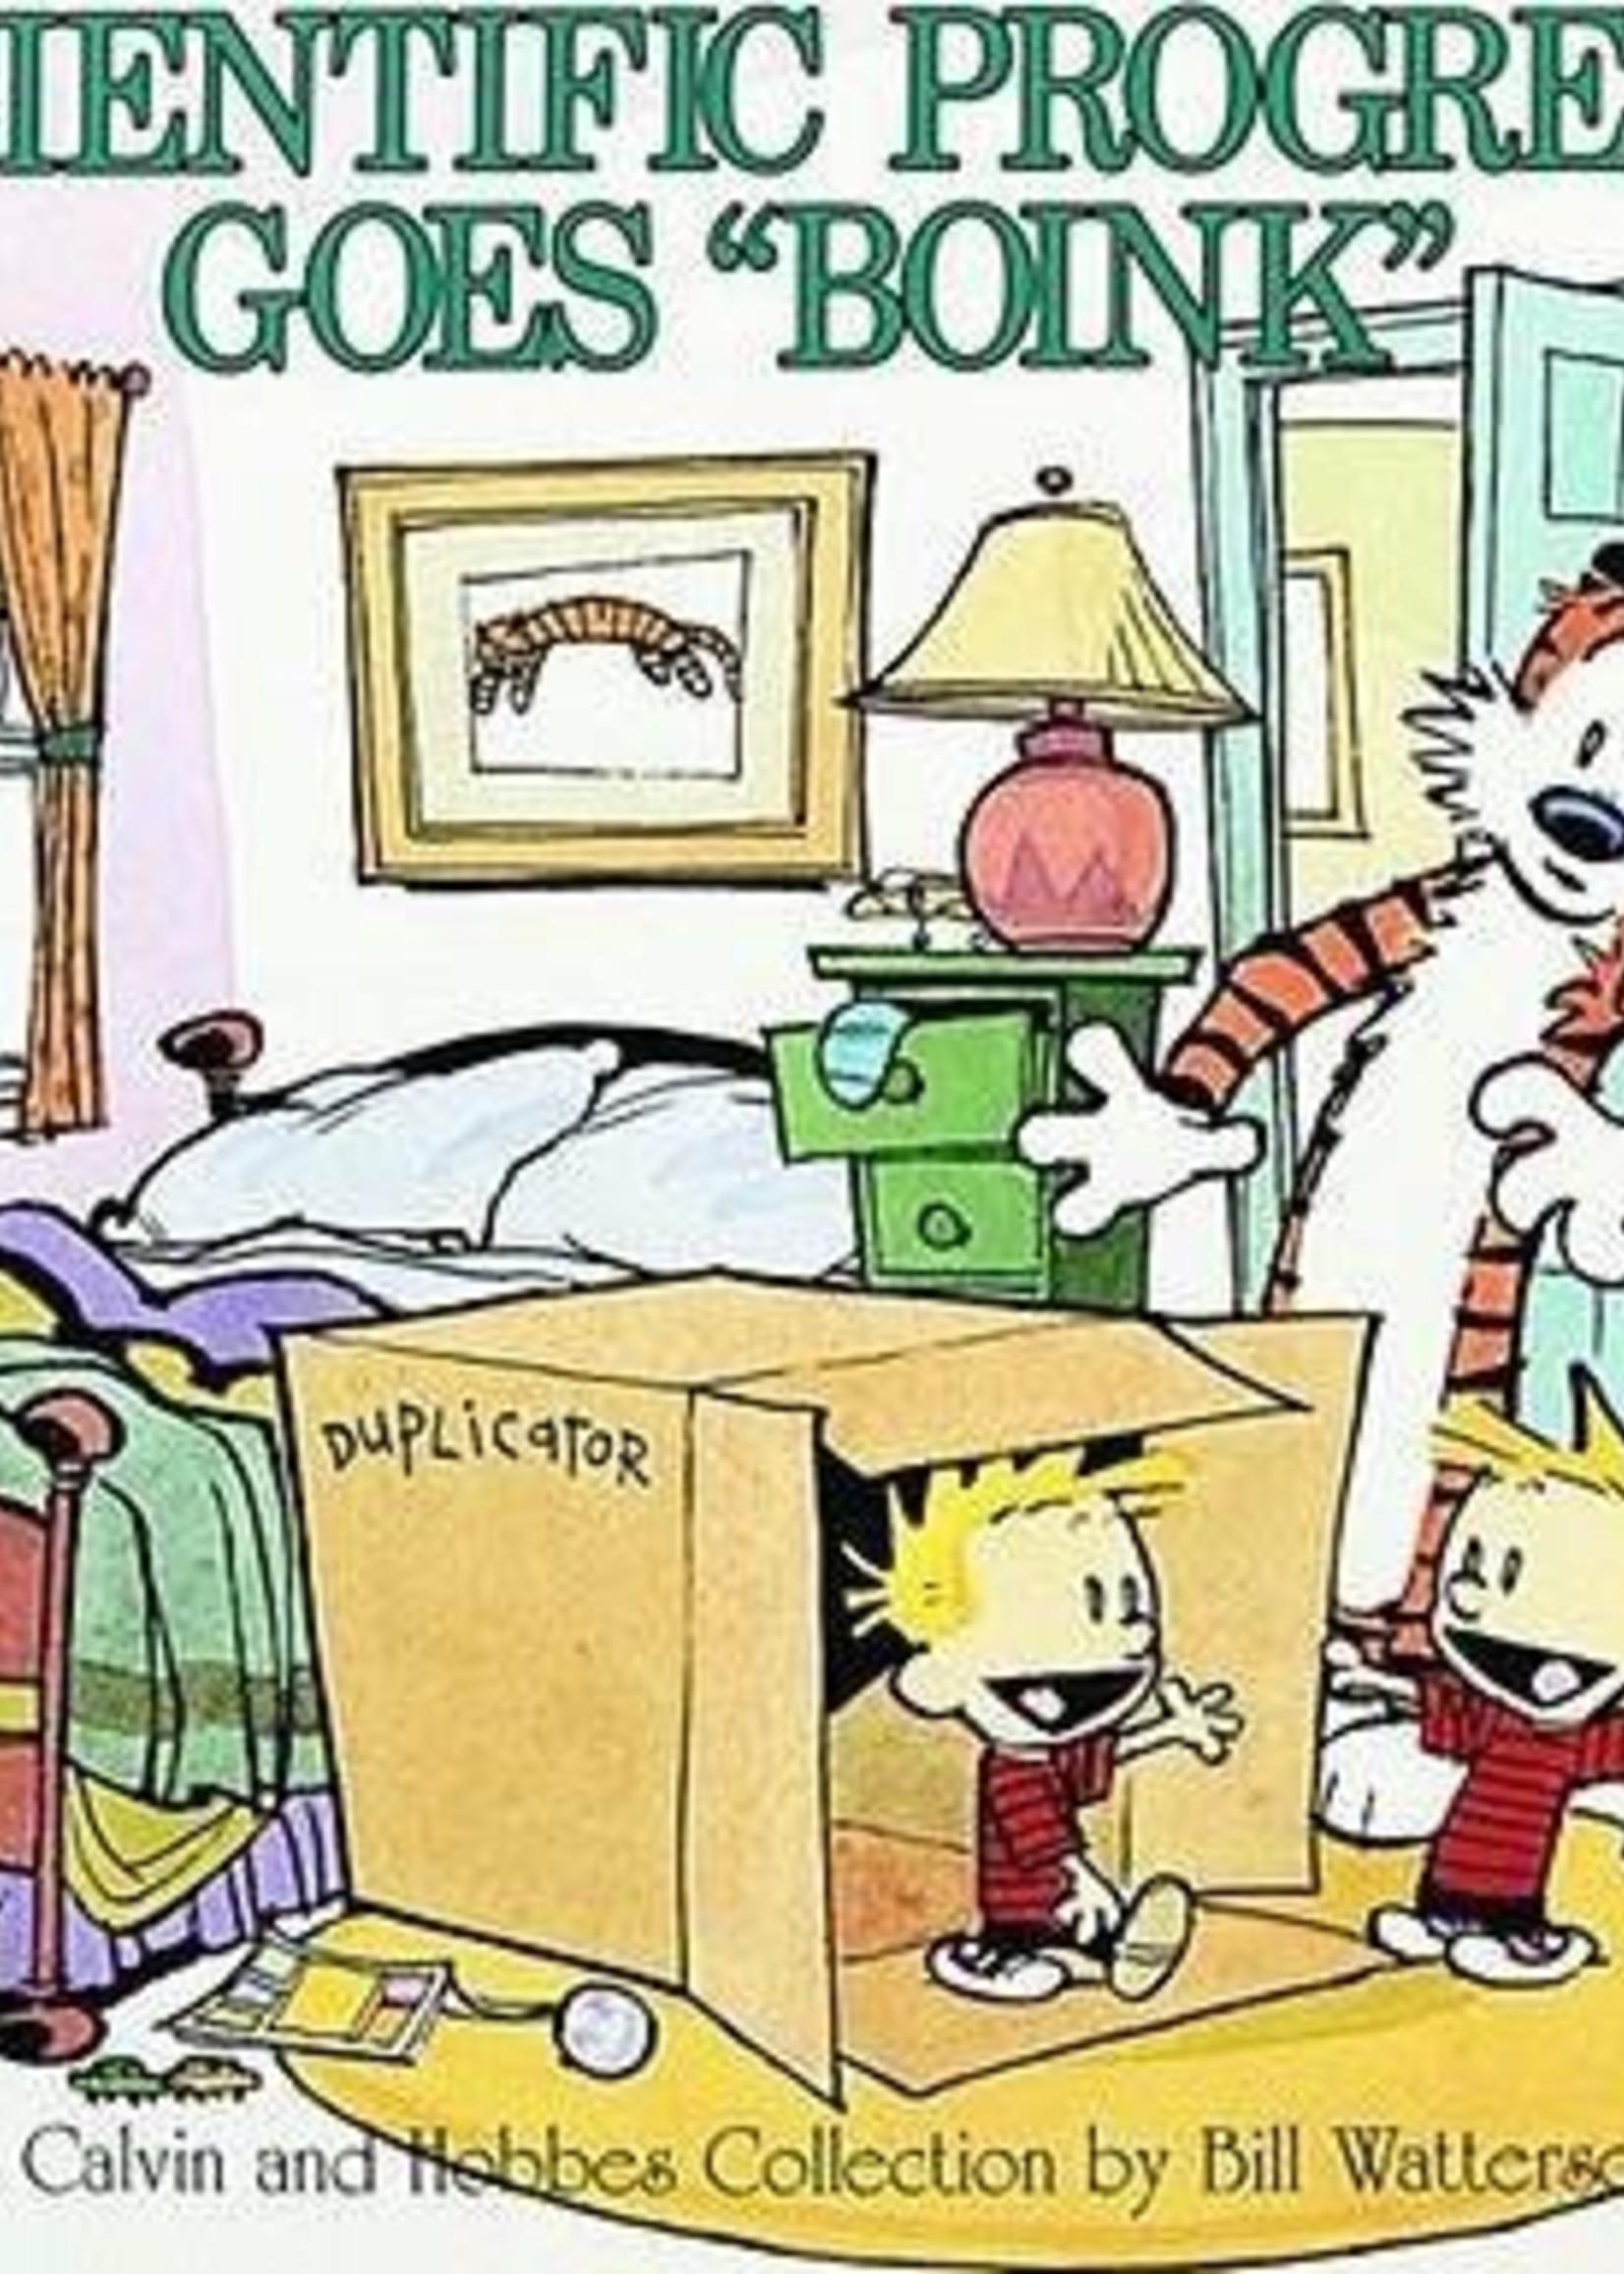 Calvin and Hobbes Volume 8, Scientific Progress Goes "Boink" - Paperback